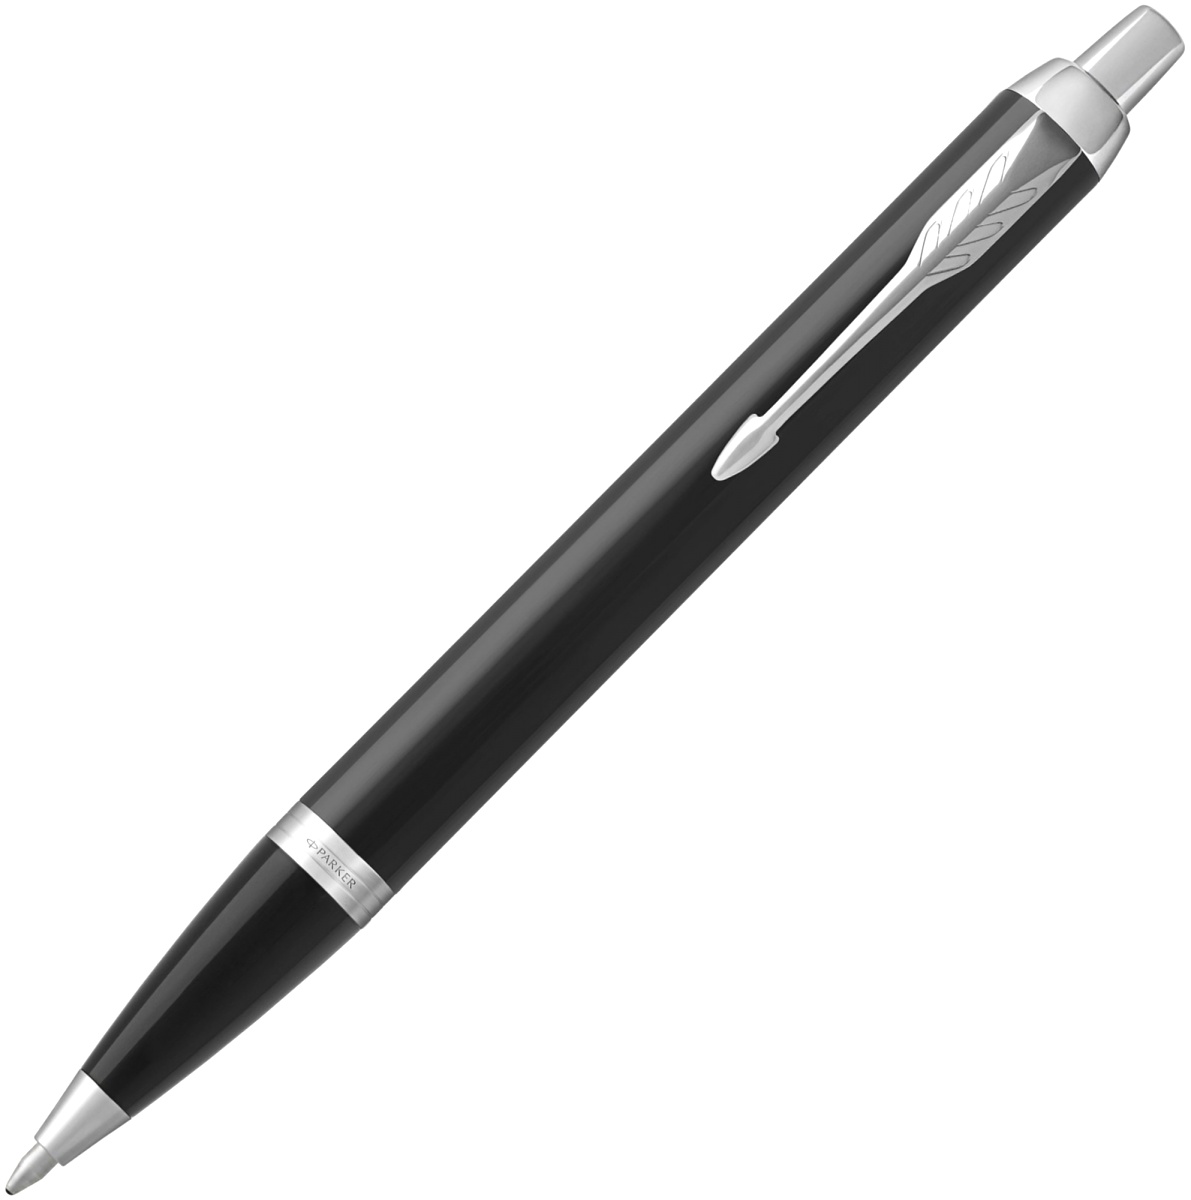  Набор Parker 2021: ручка шариковая Parker IM Core K321, Black CT + чехол для ручки, фото 4